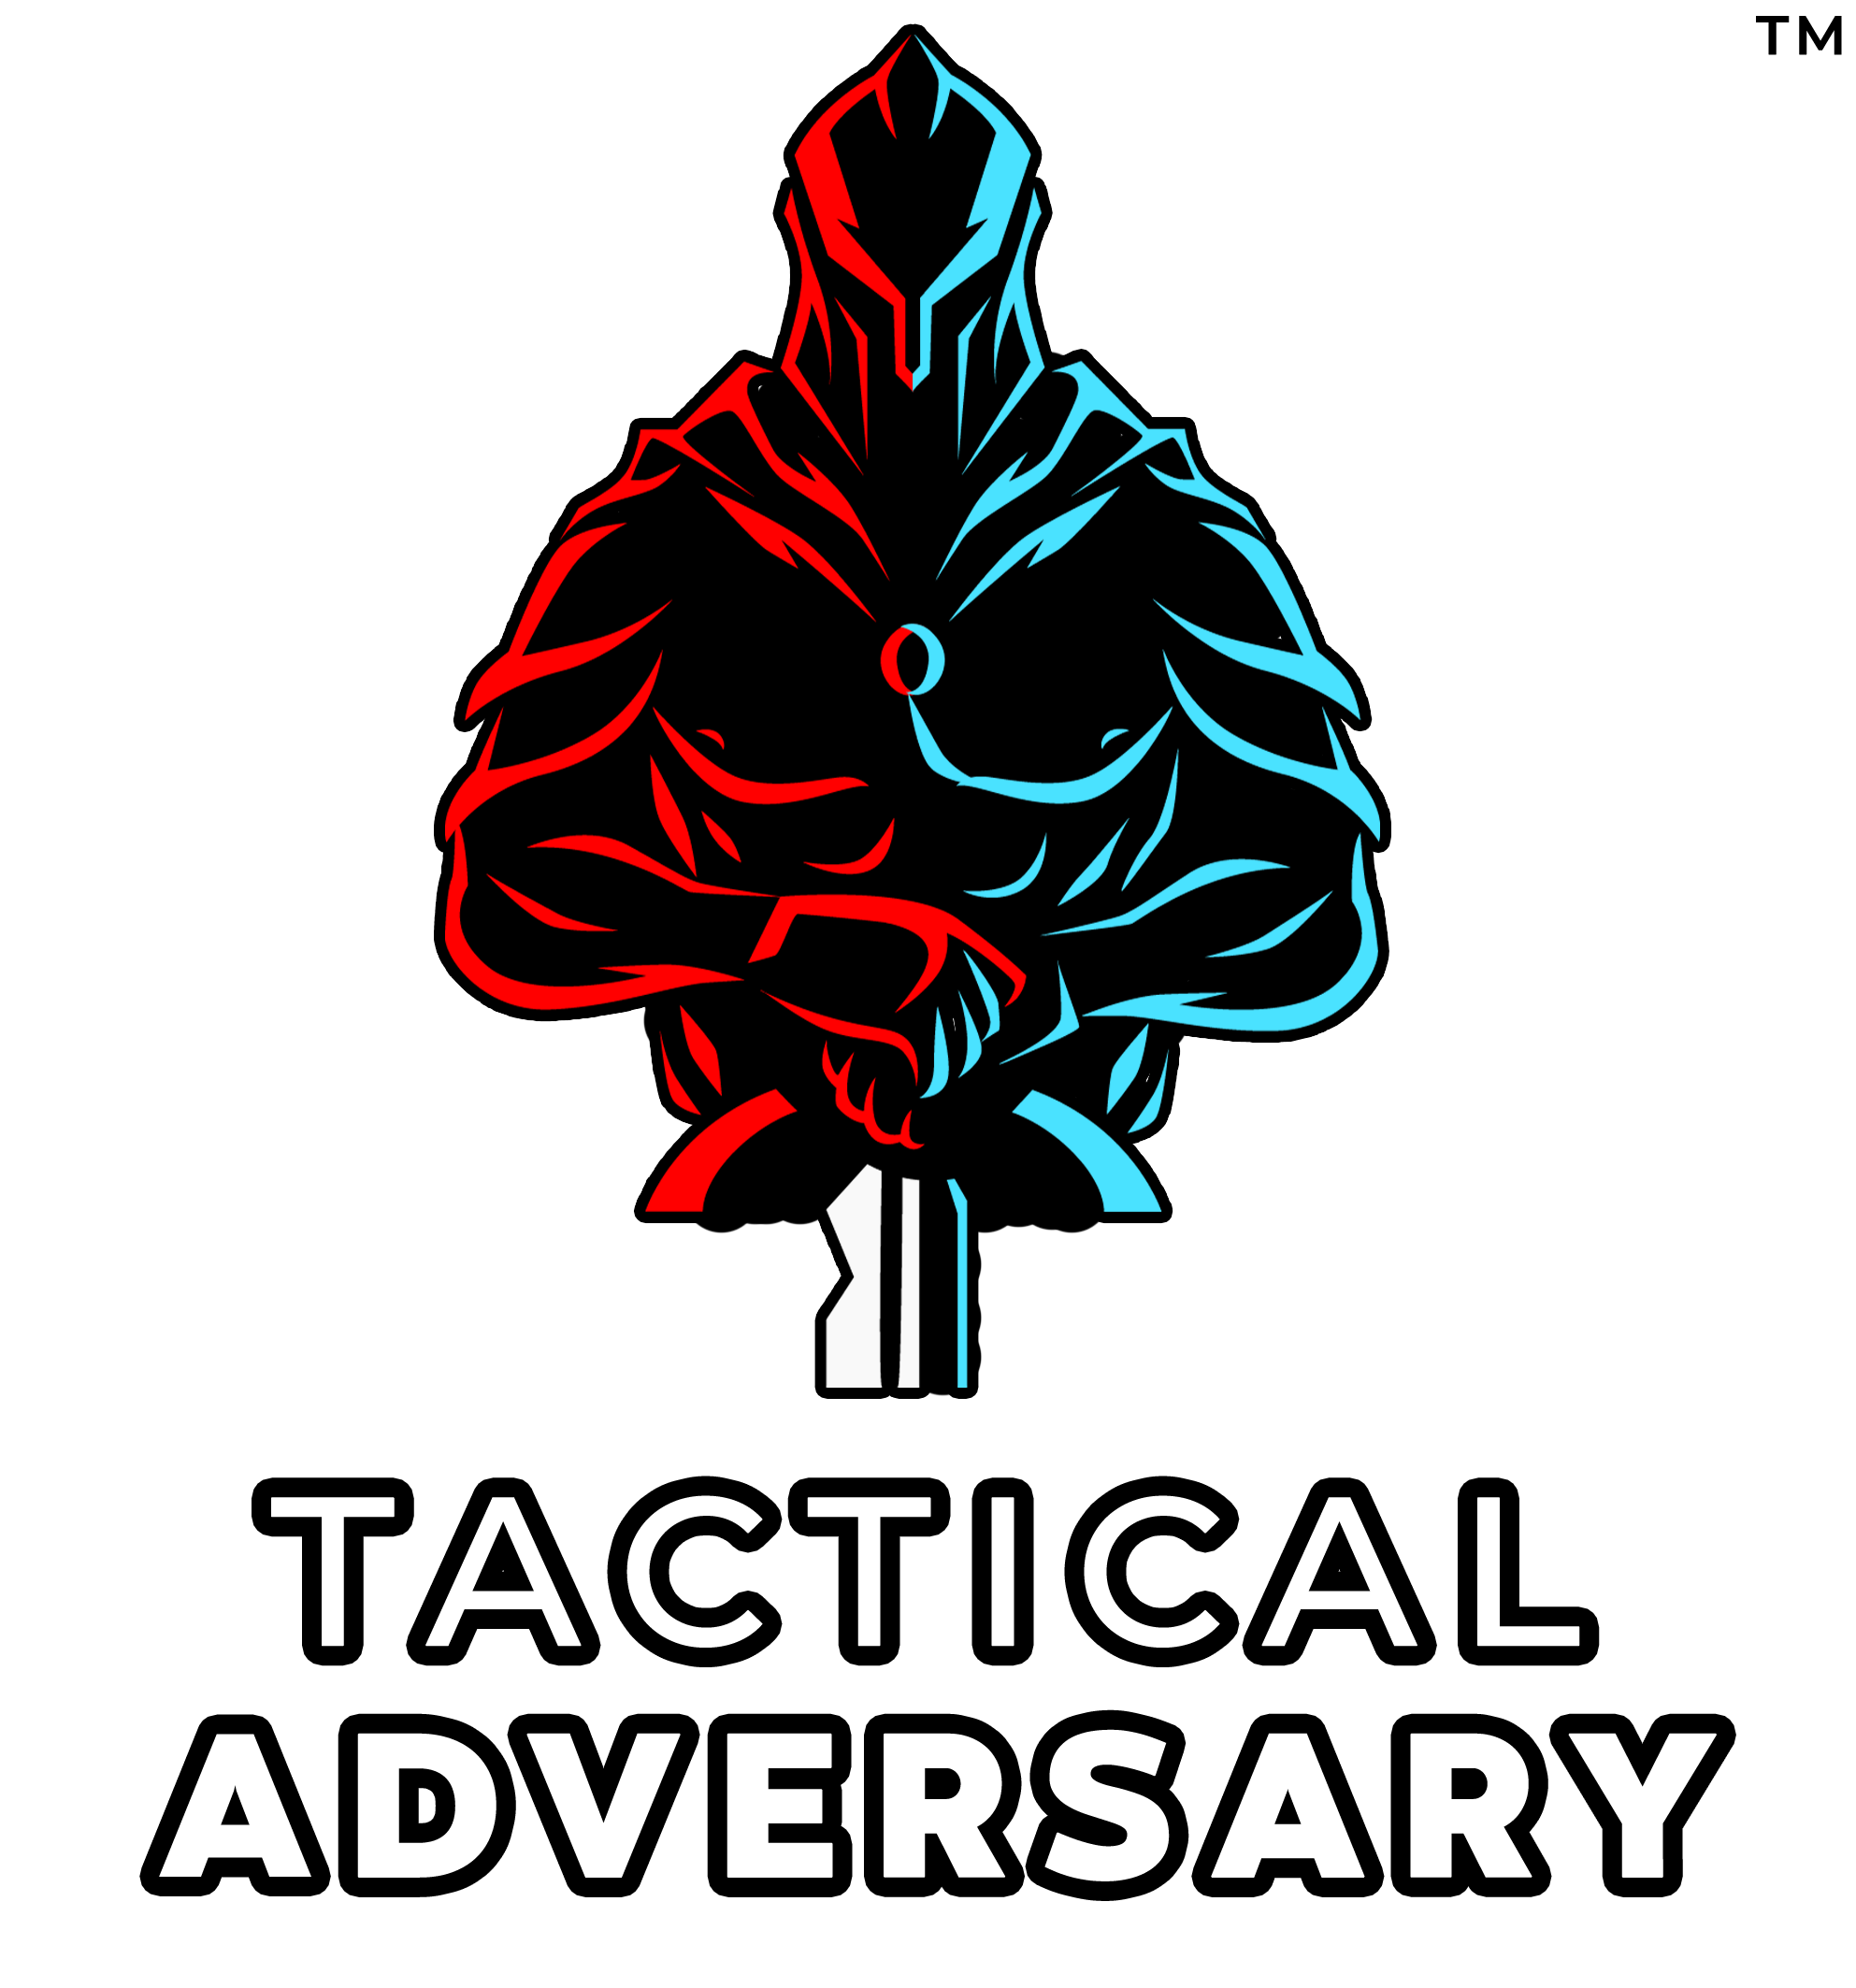 Tactical Adversary